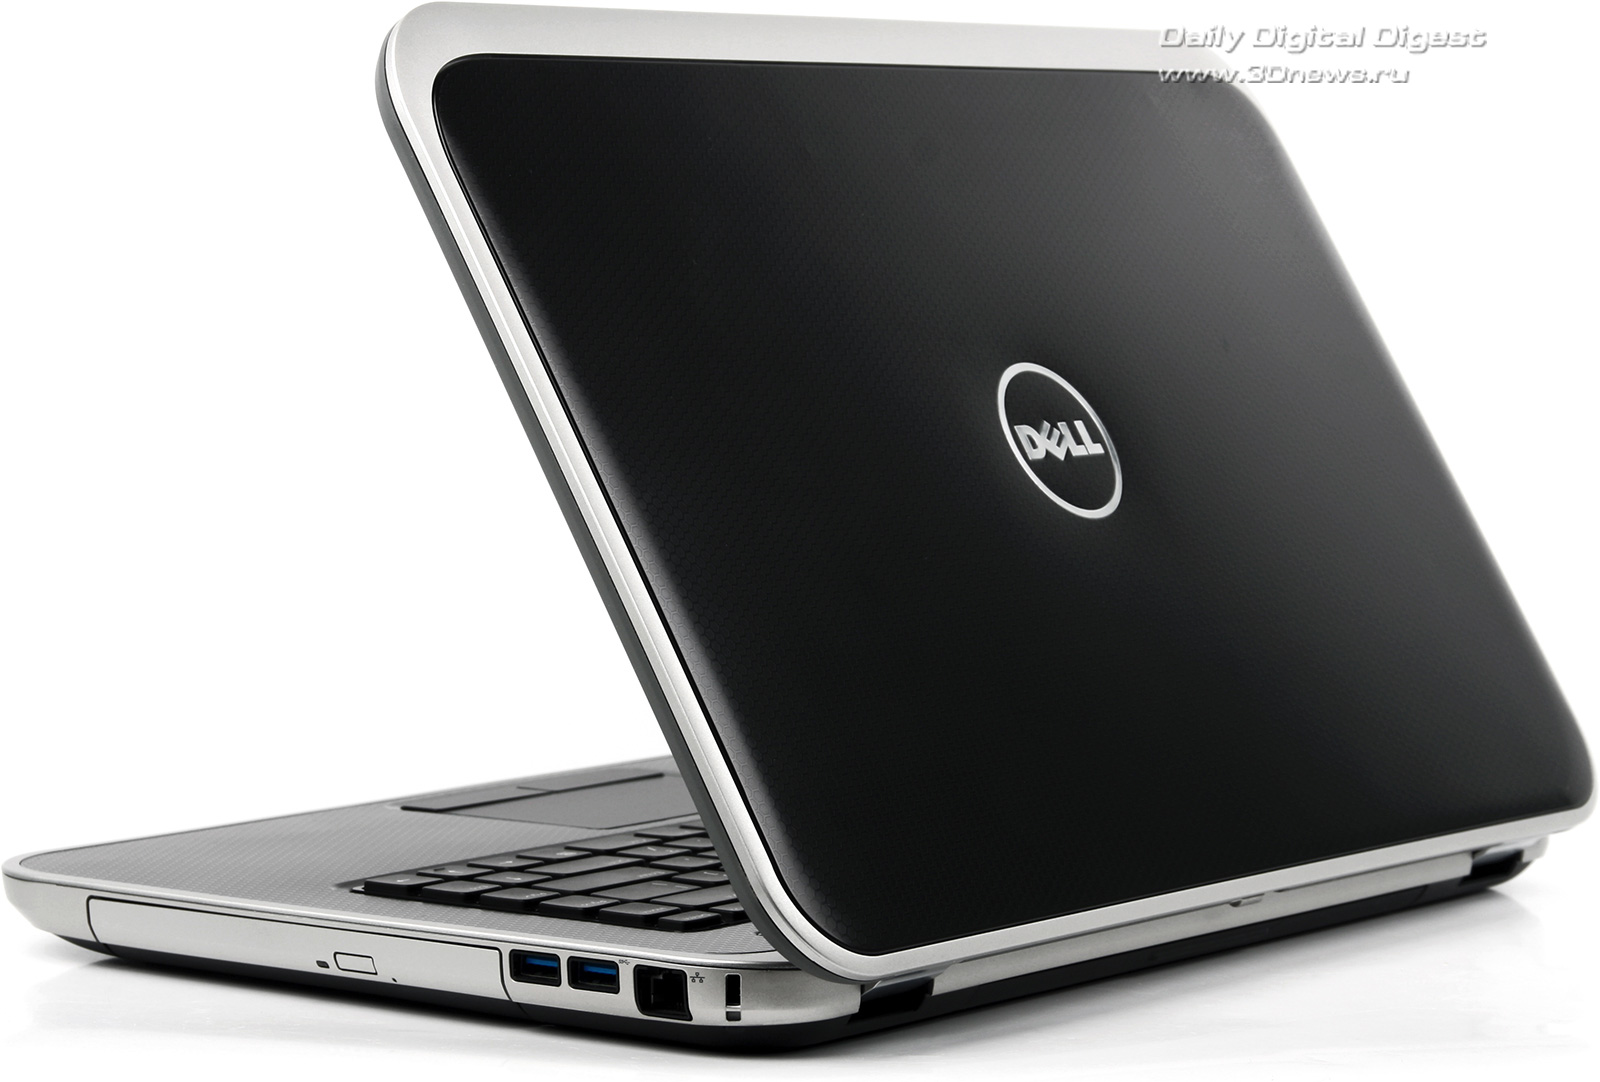 Ноутбуки Dell Купить В Спб Недорого